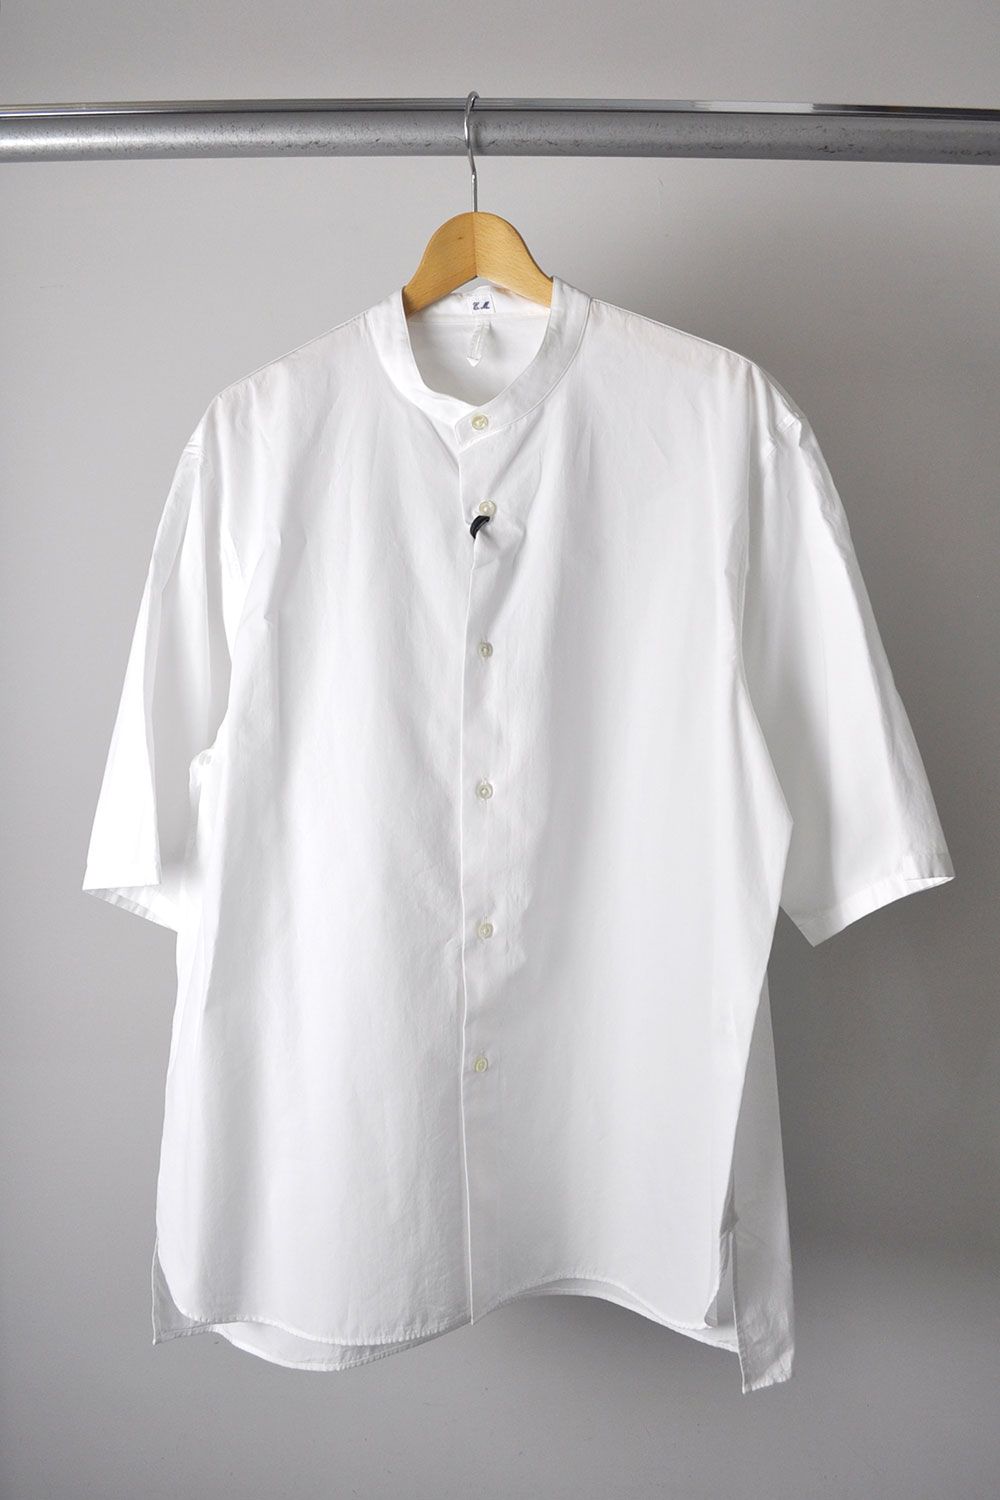 Ets.MATERIAUX - Band Collar Short Sleeve Shirt / WHITE | Stripe 